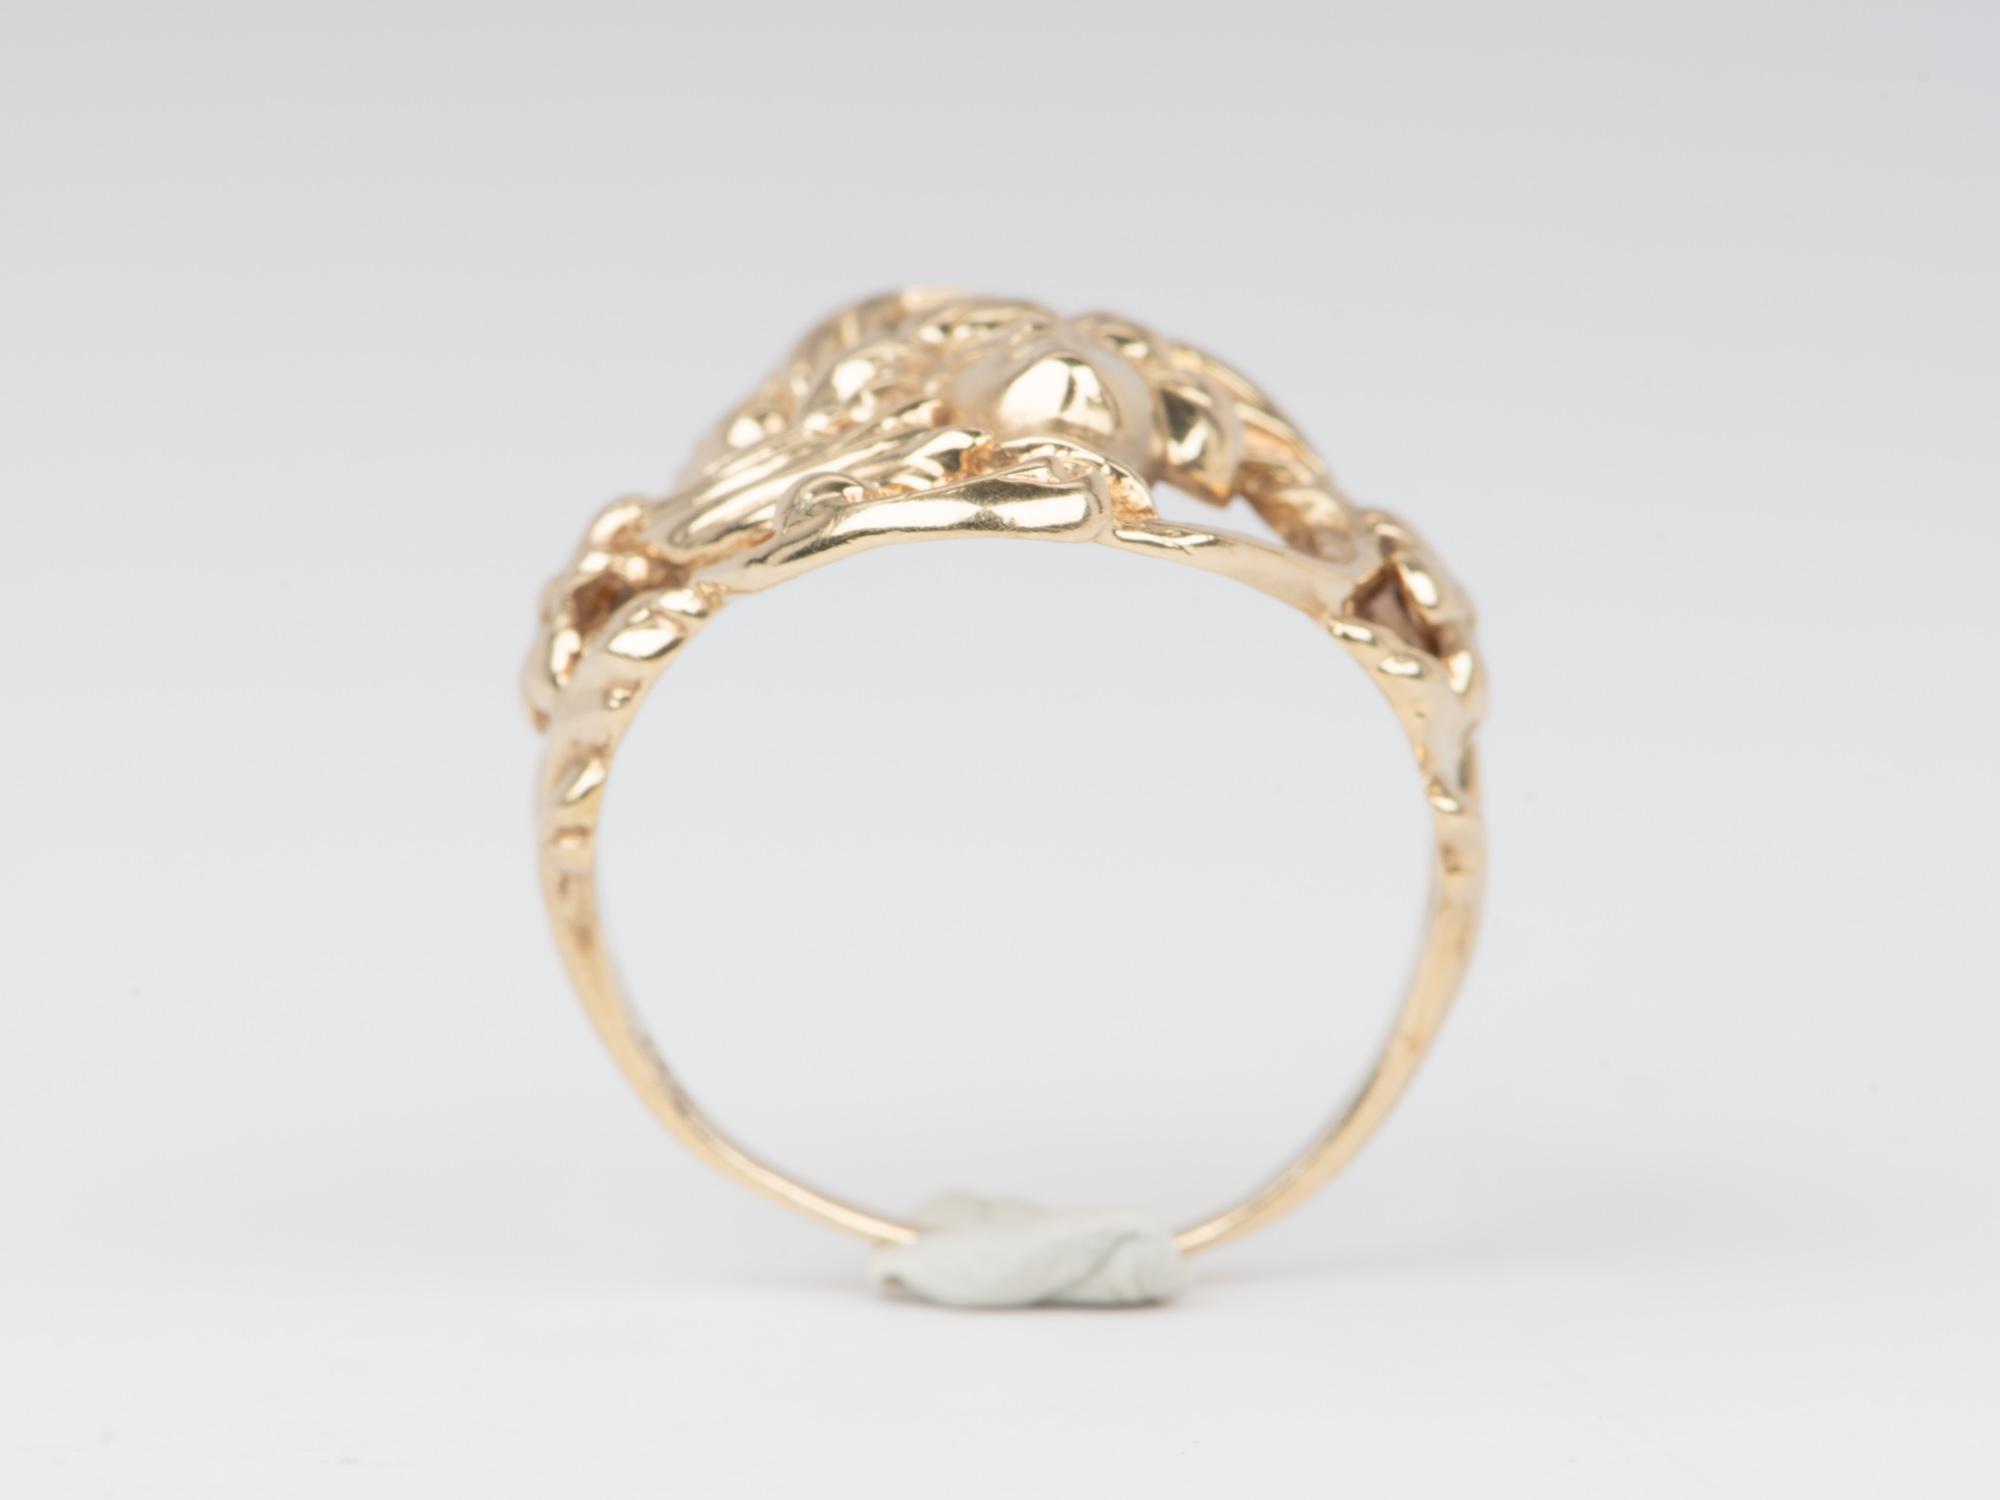 Women's or Men's Vintage Jewelry Art Nouveau Floral Woman Ring 14K Gold 7g For Sale